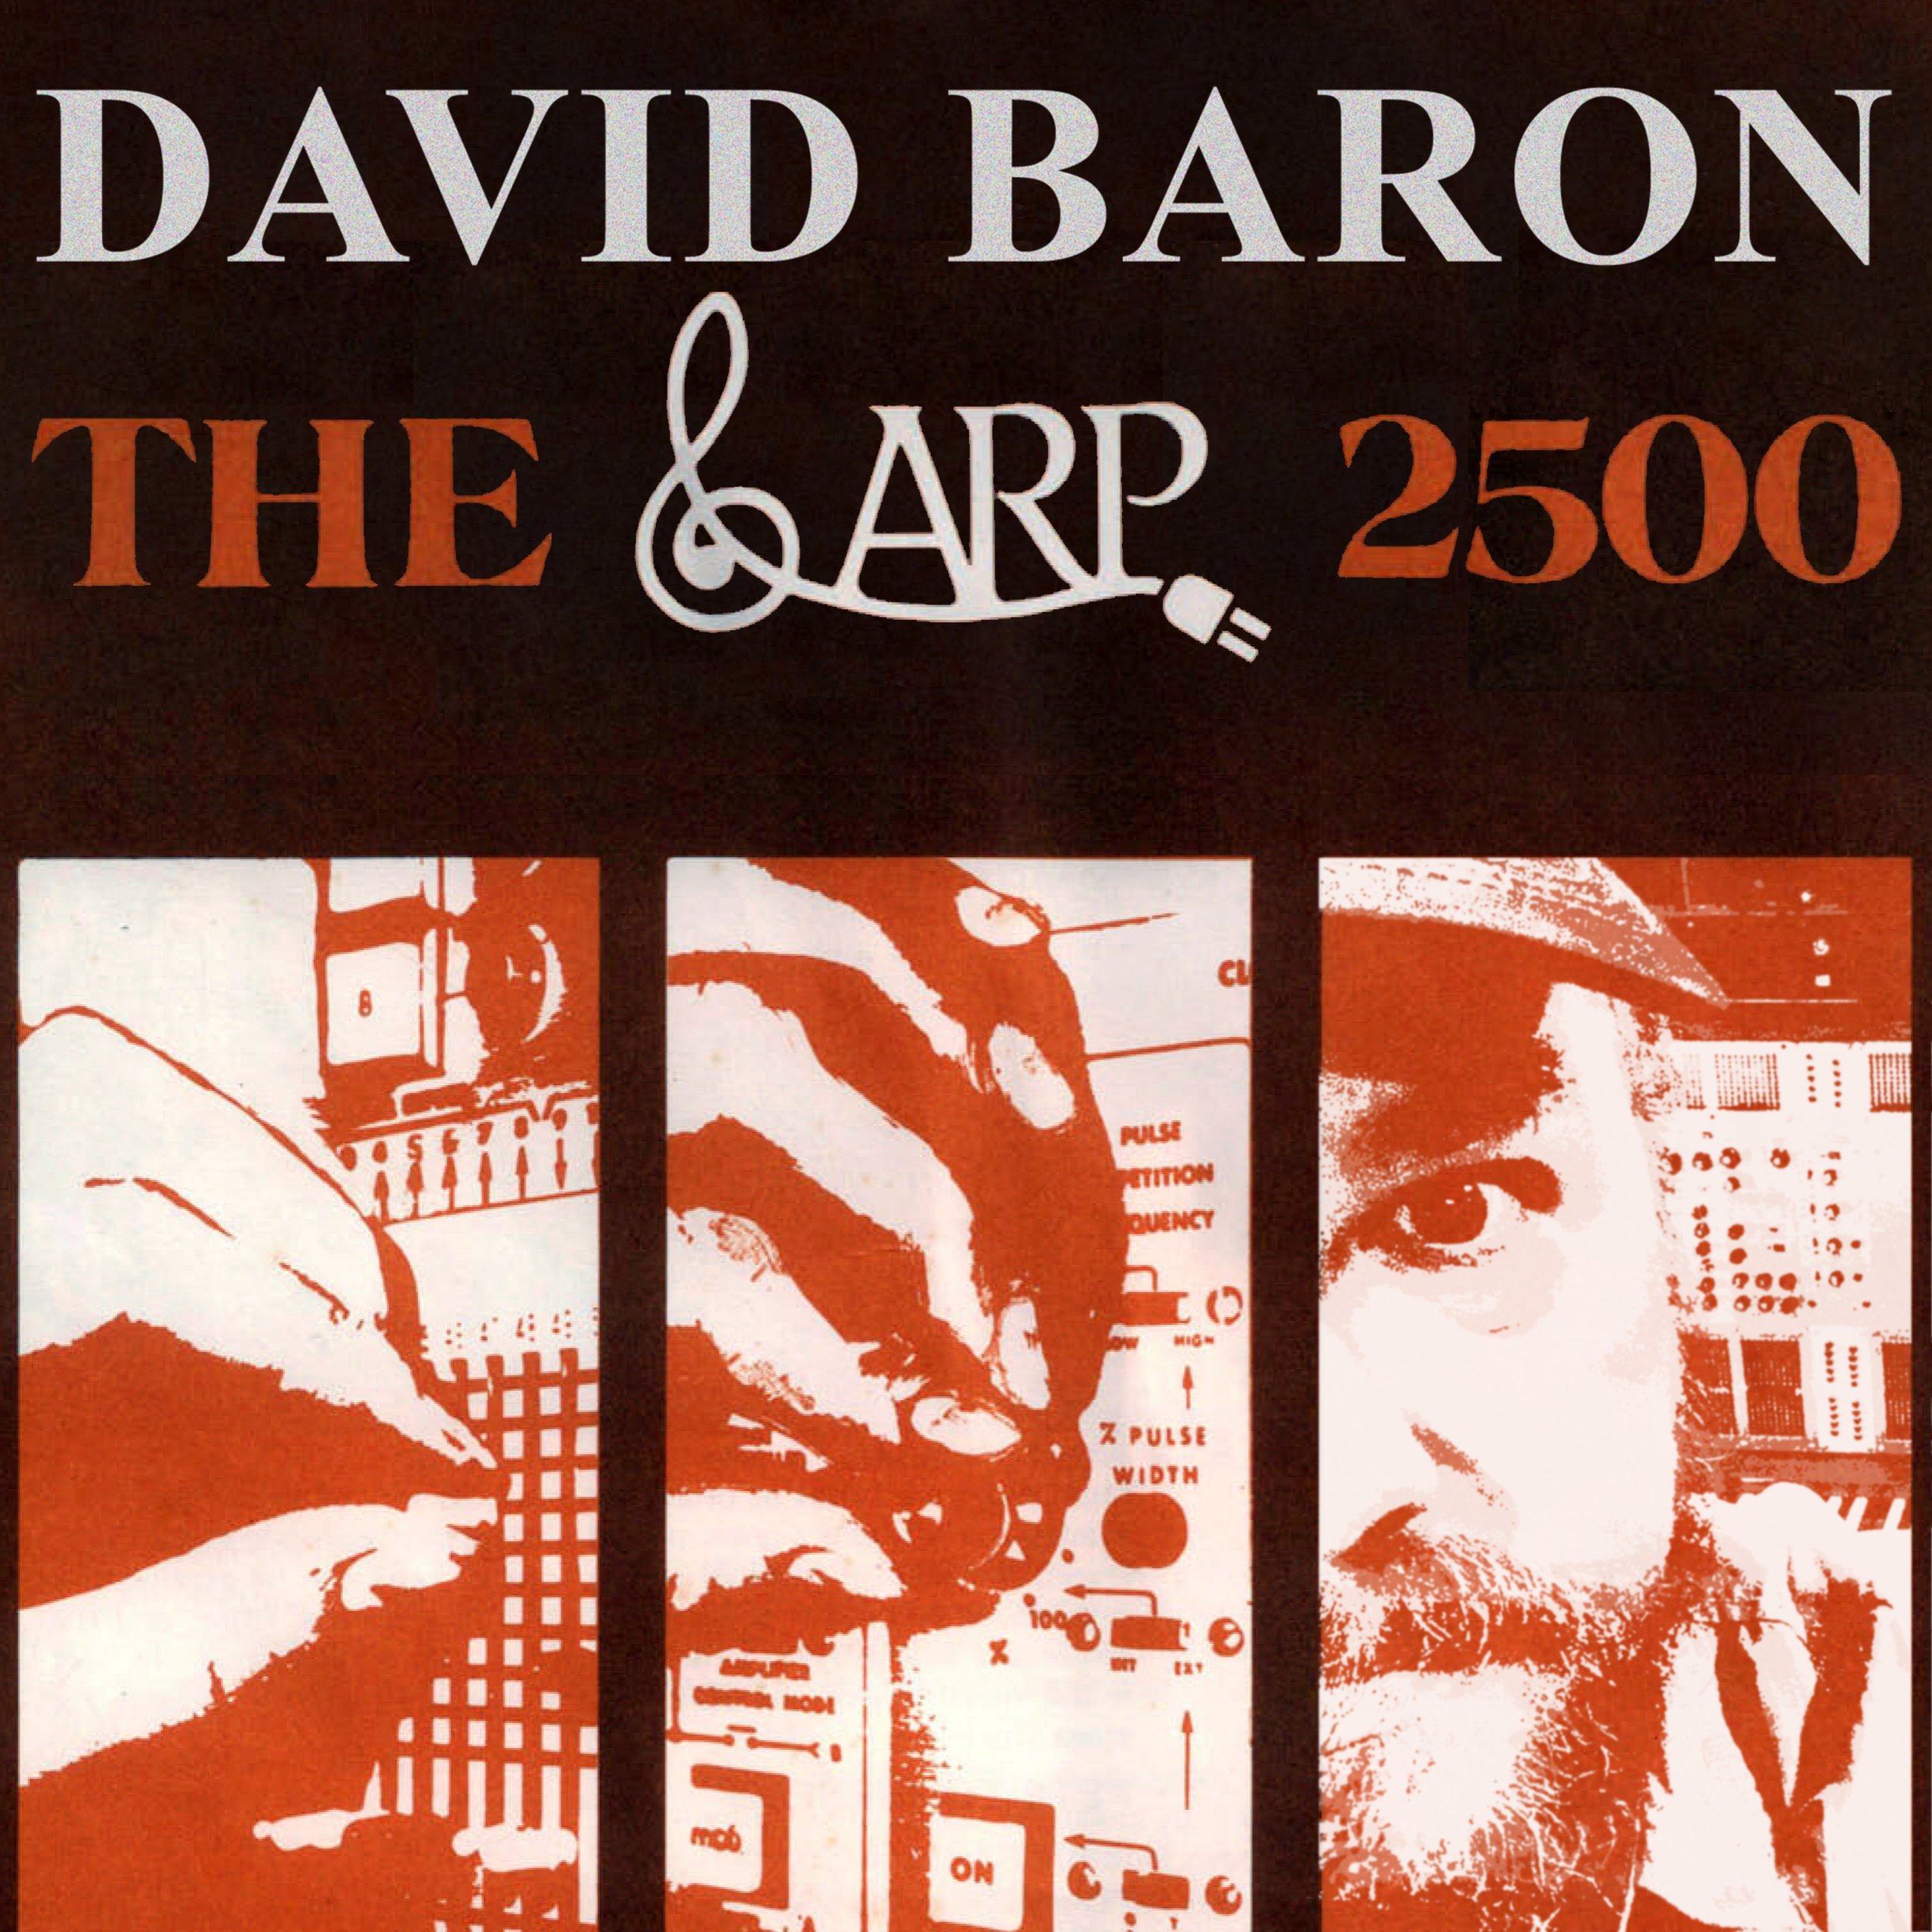 David Baron - The ARP 2500 coverart.jpg